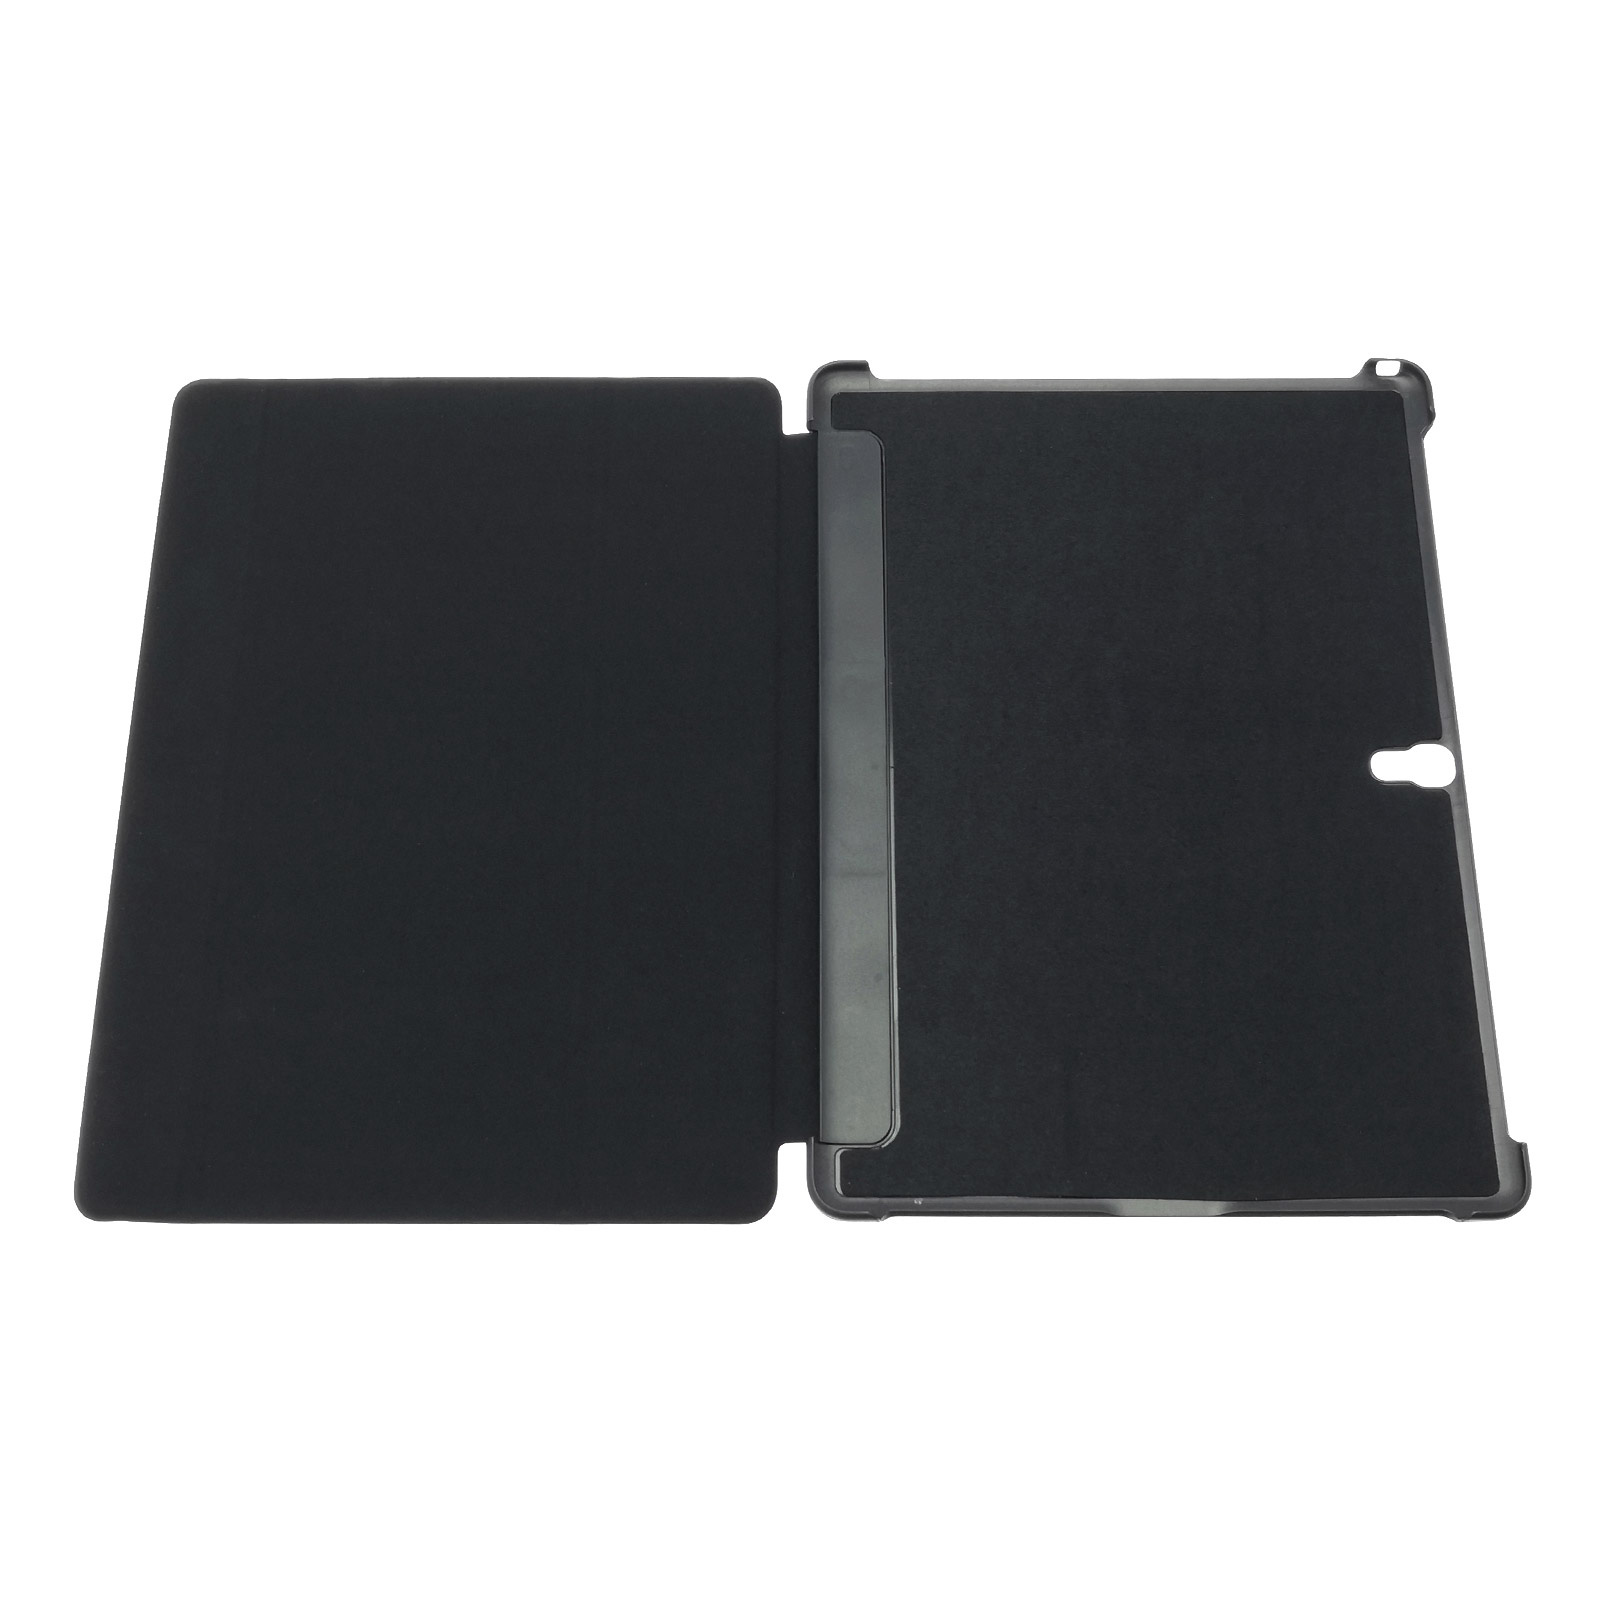 Чехол книжка для SAMSUNG Galaxy Tab S 10.5 (SM-T800, SM-T805), силикон, пластик, цвет черный.